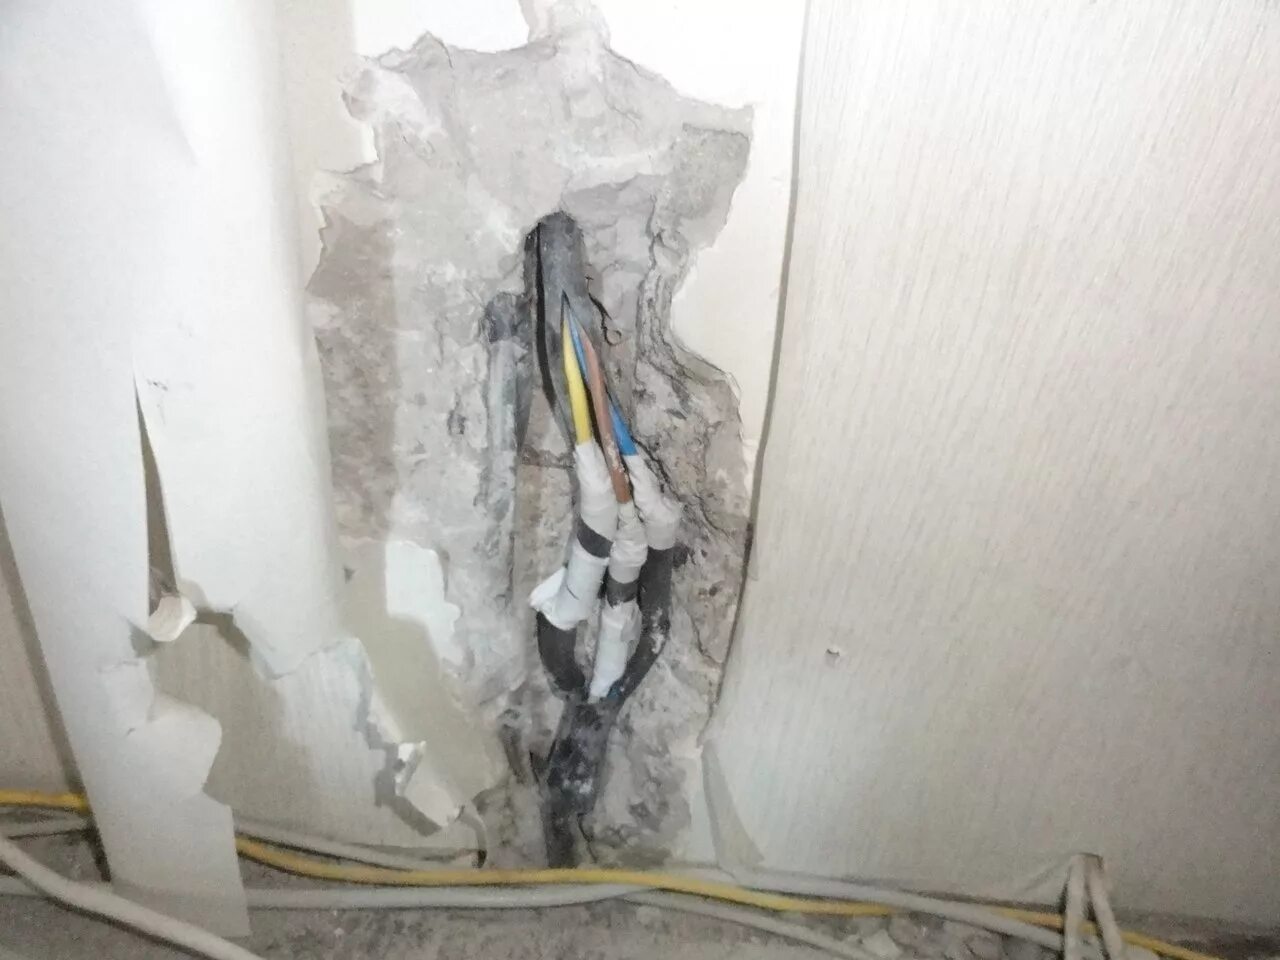 Наращивание вводного кабеля 10мм2. Провода на стене. Соединение кабеля в стене. Соединение проводов в стене.